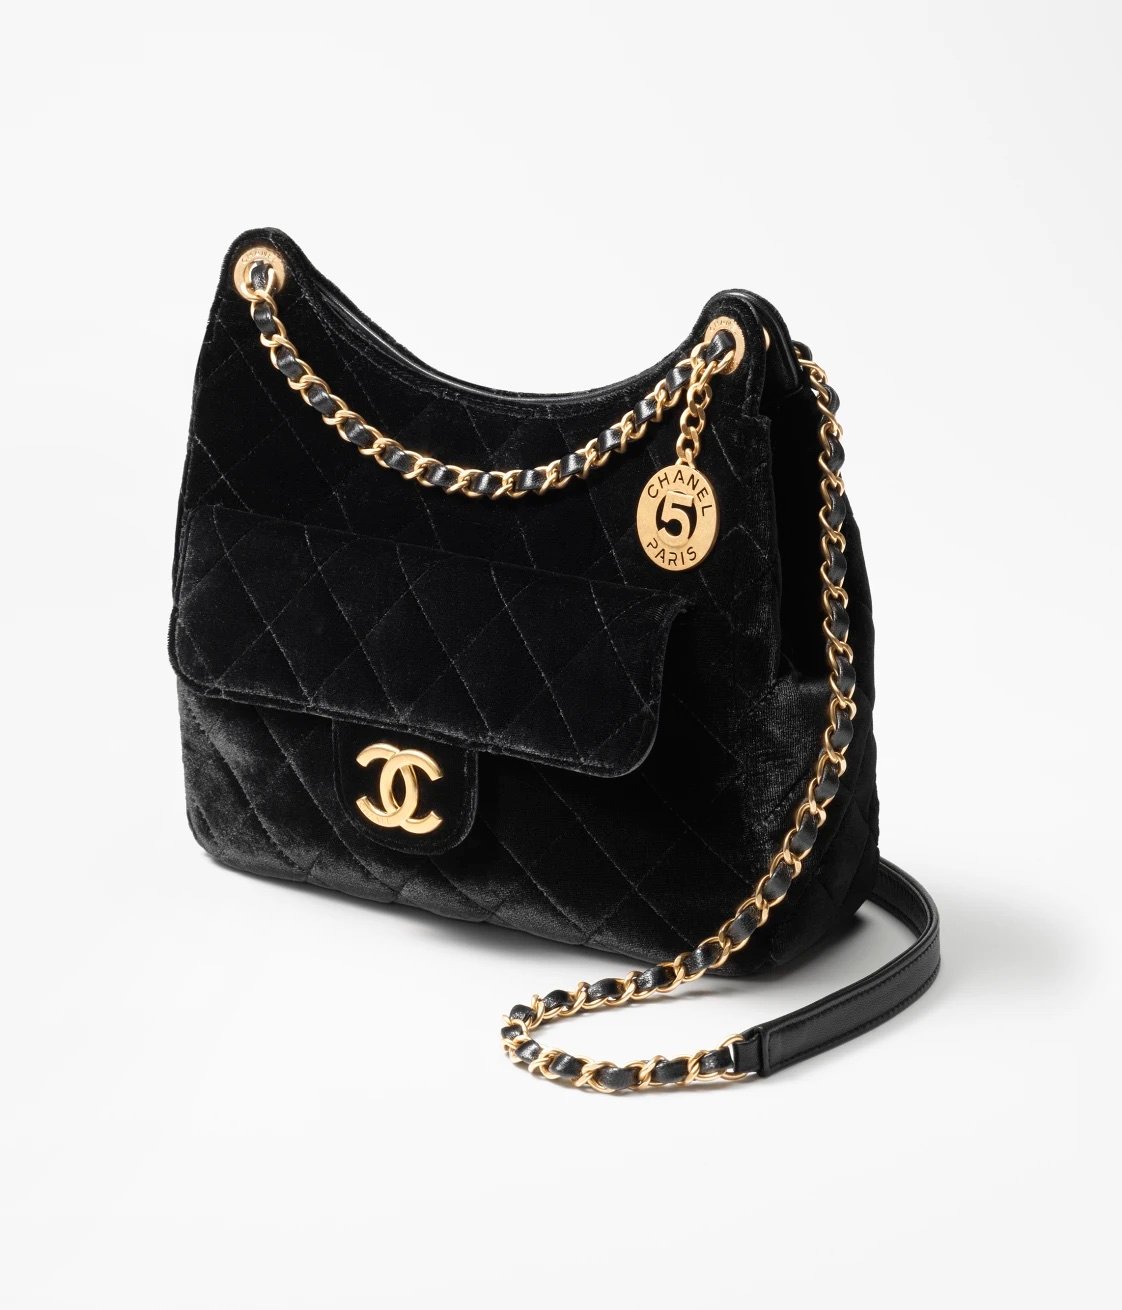 5 Chanel Bags Under 5K - Fall 2023 Edition - PurseBop